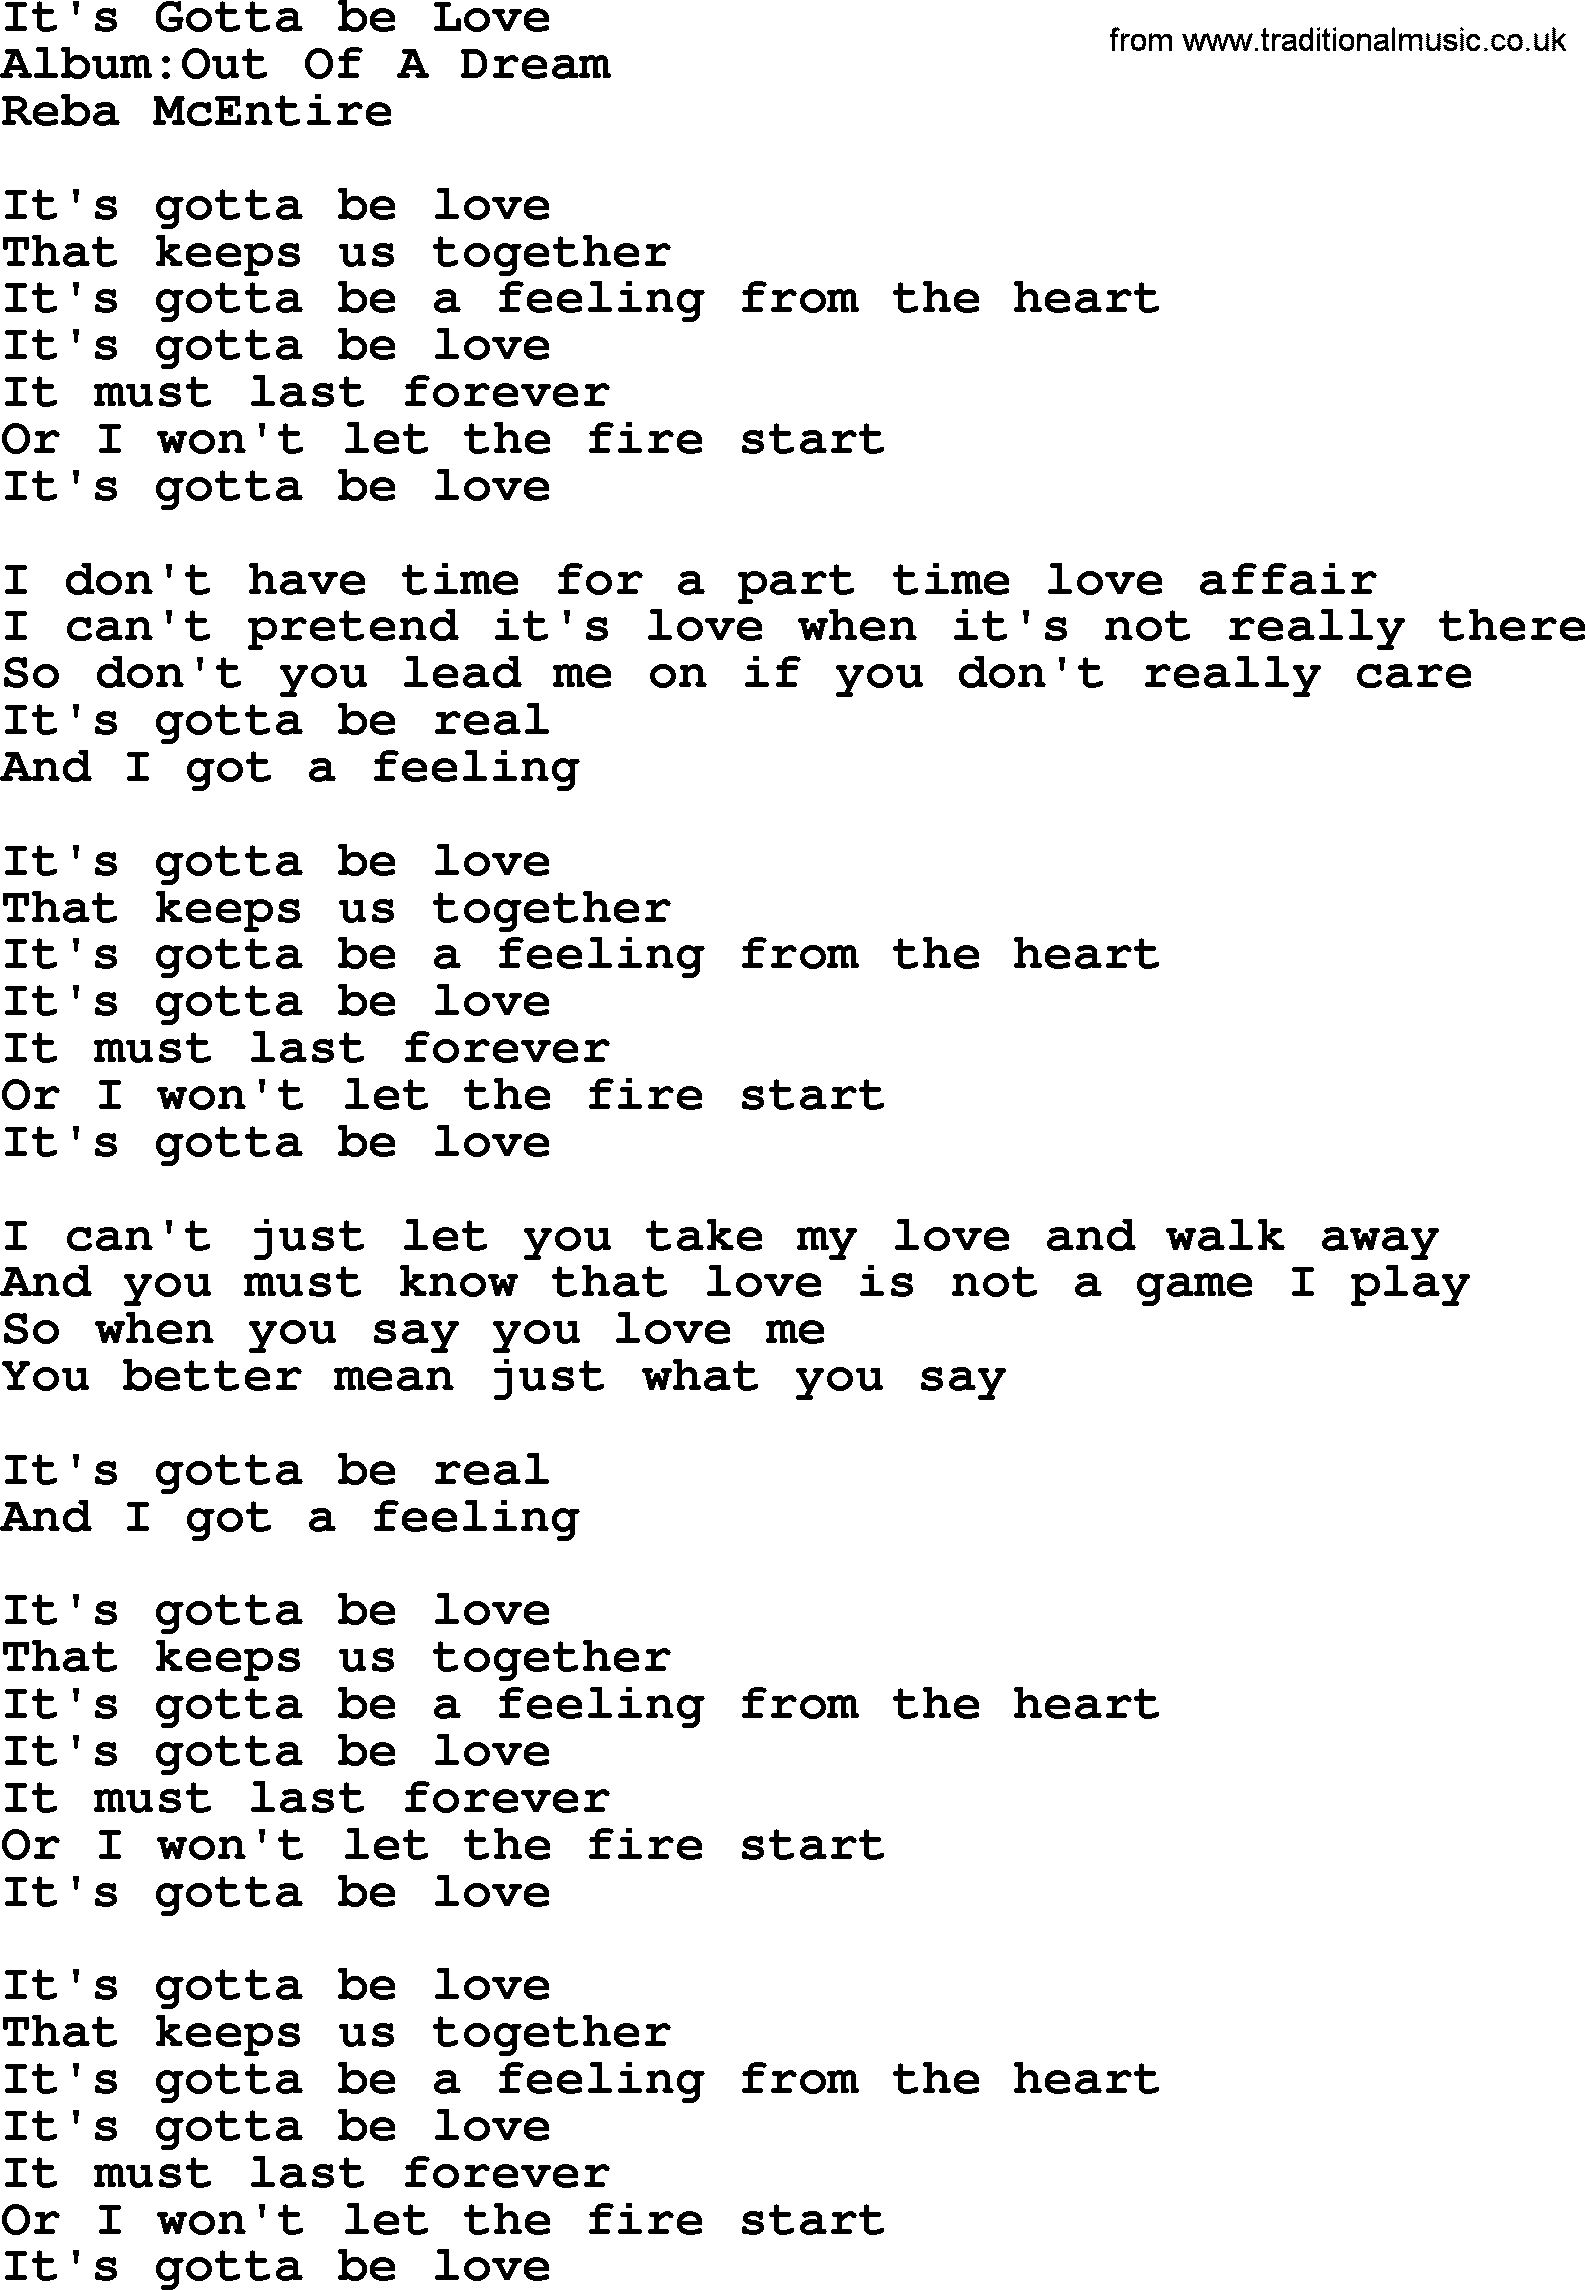 Reba McEntire song: It's Gotta be Love lyrics